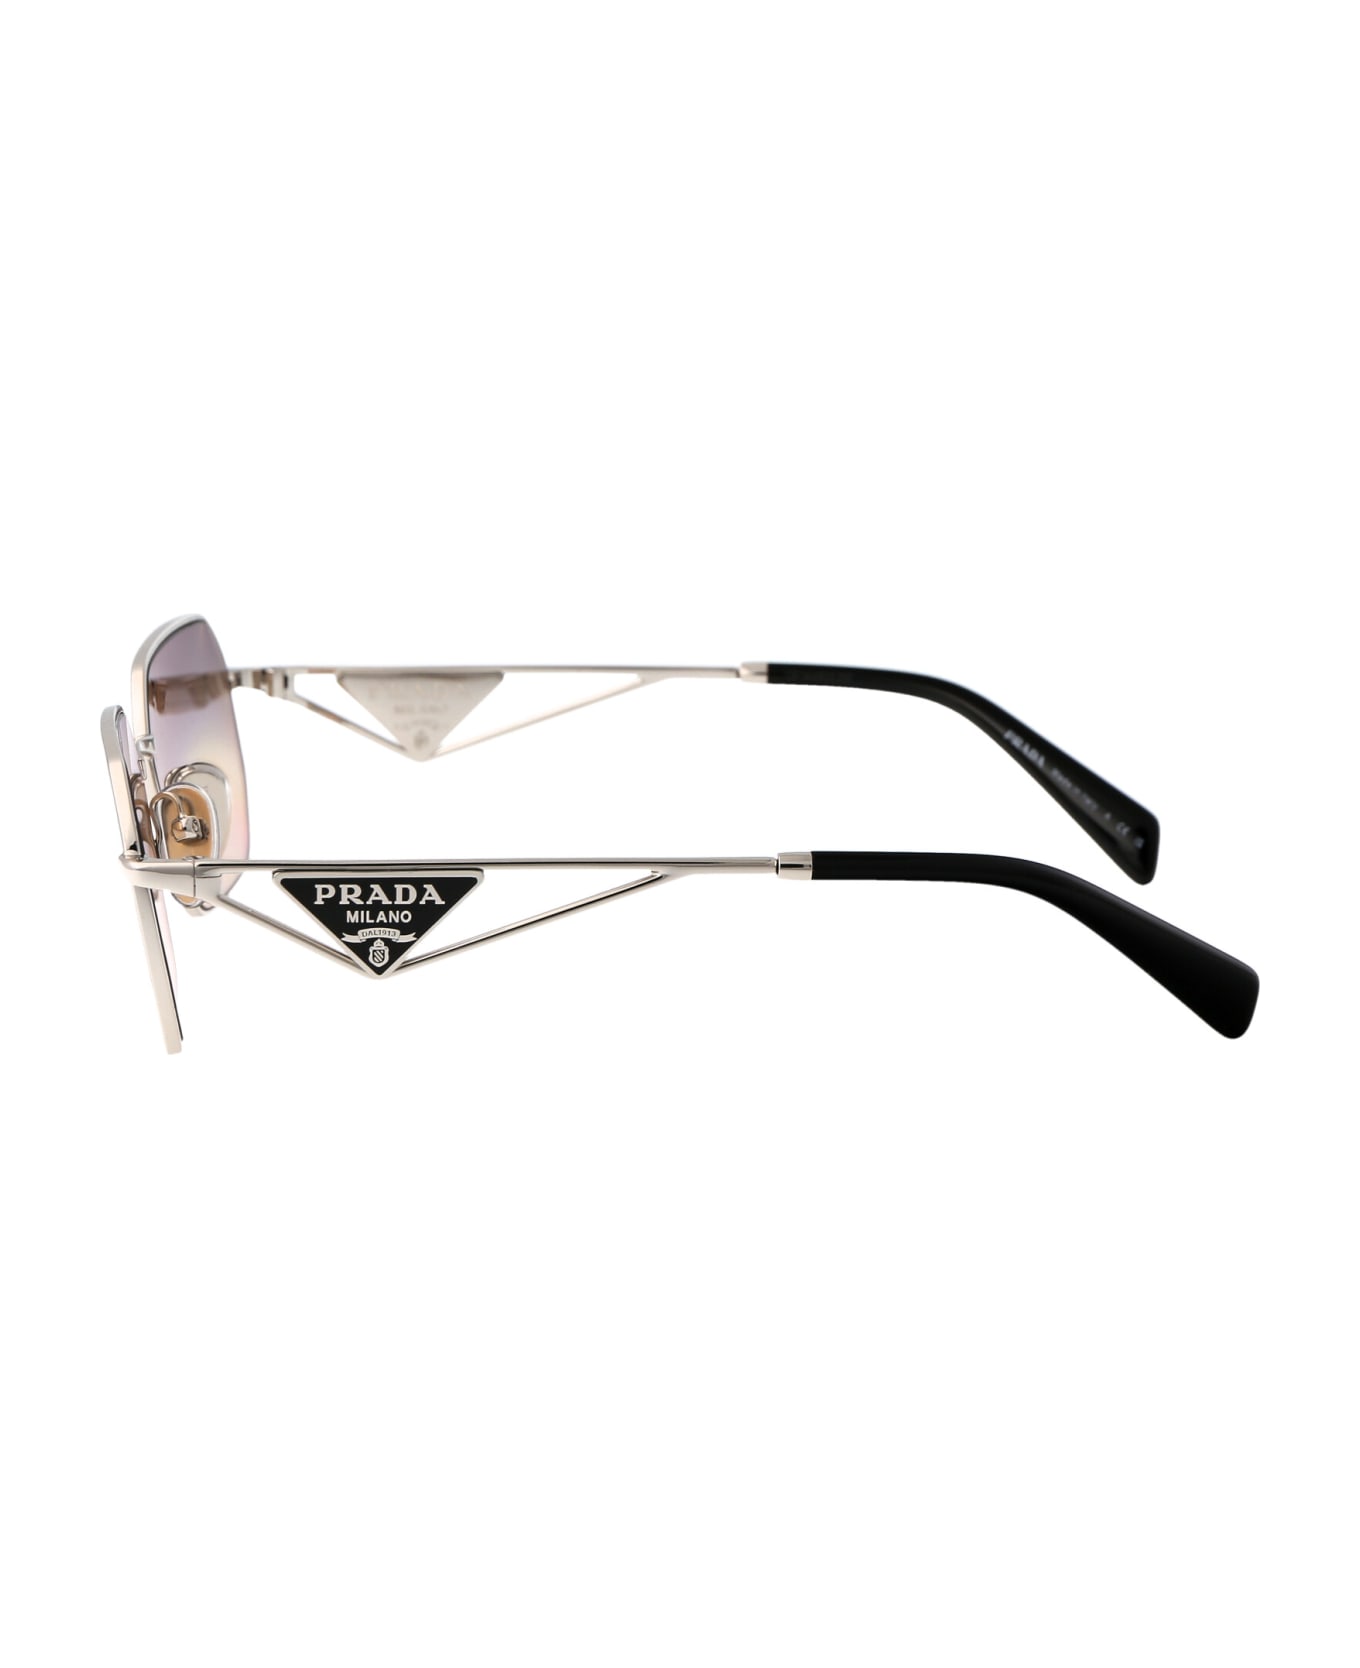 Prada Eyewear 0pr A51s Sunglasses - 1BC8J1 Pale Gold